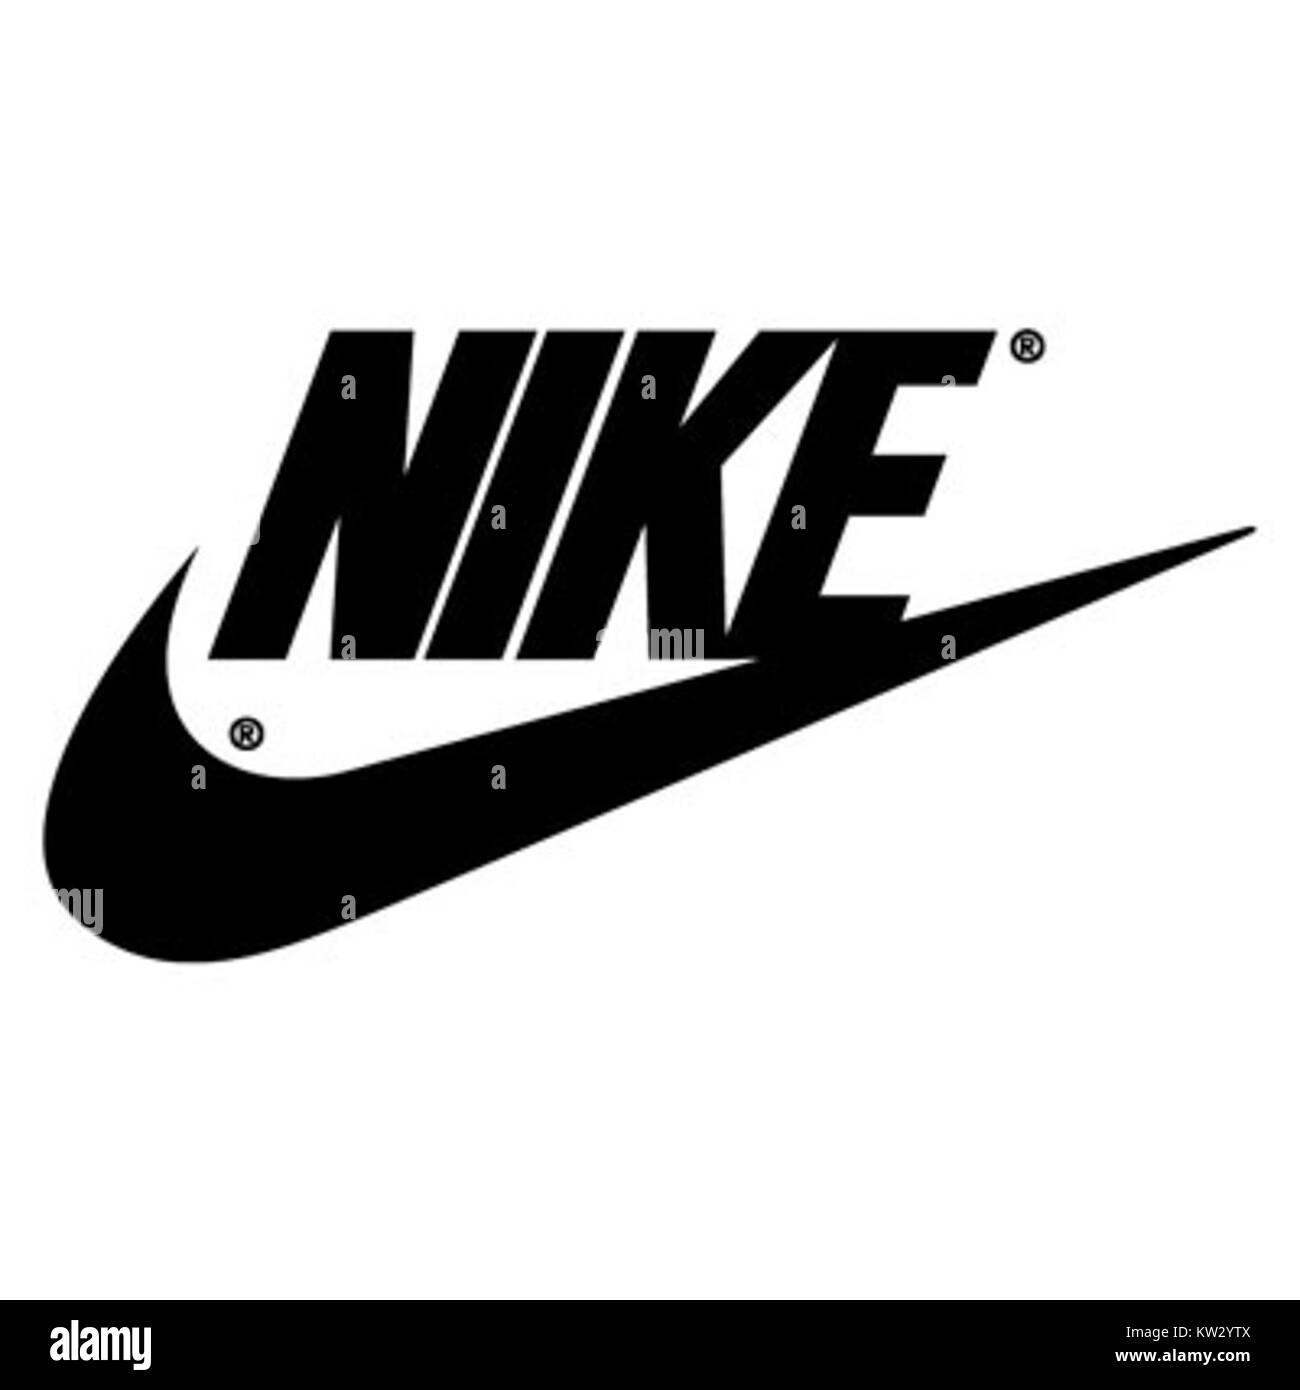 Old Nike logo Stock Photo - Alamy